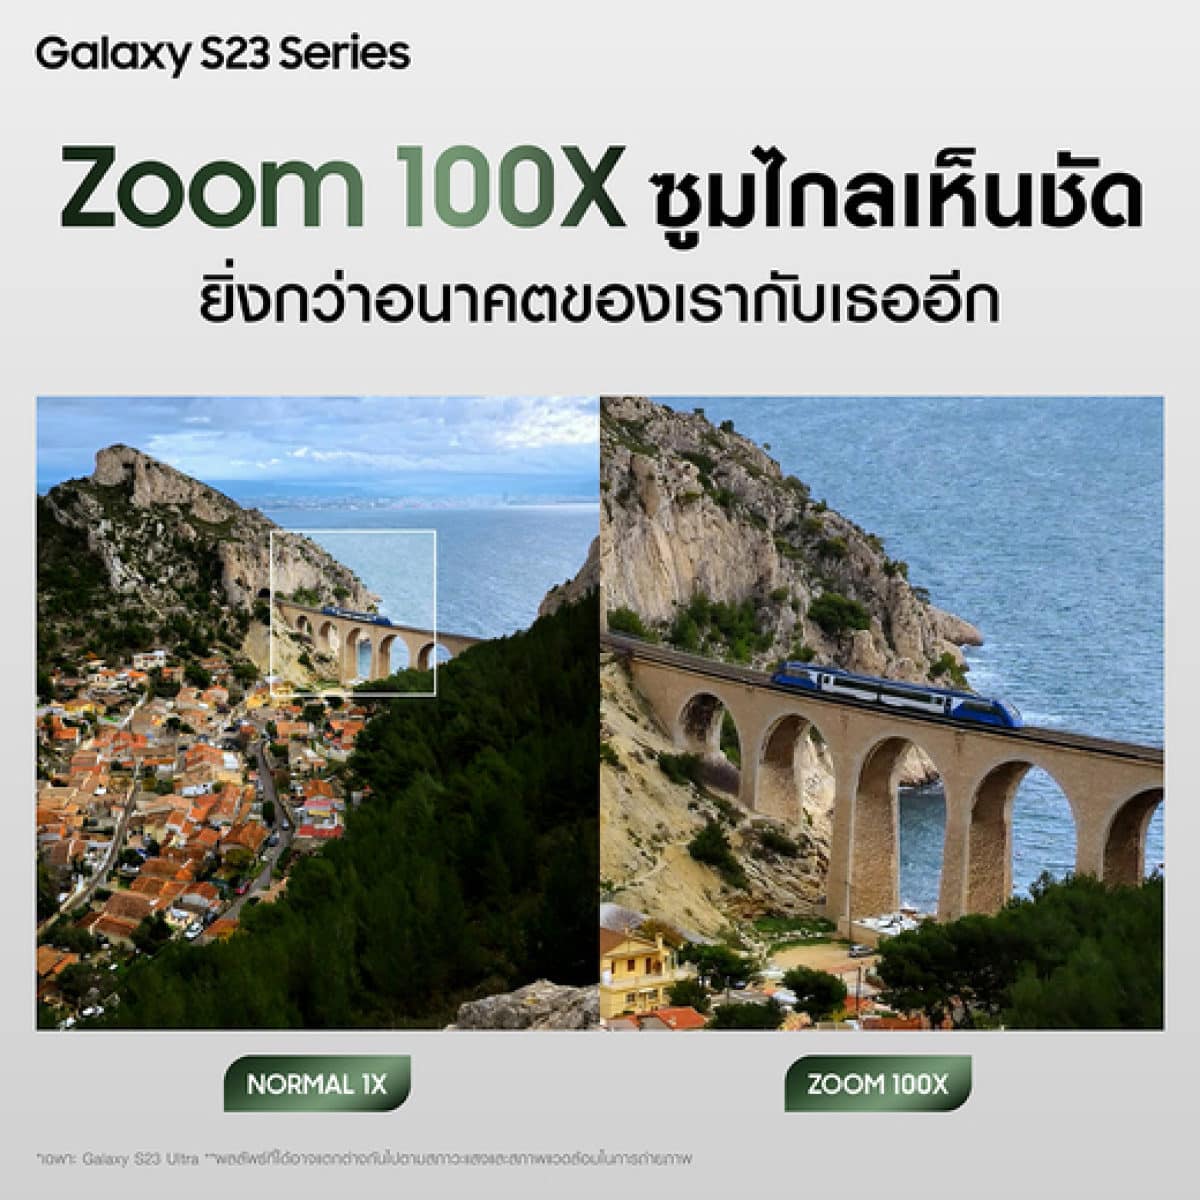 Samsung Galaxy S23 Series Zoom